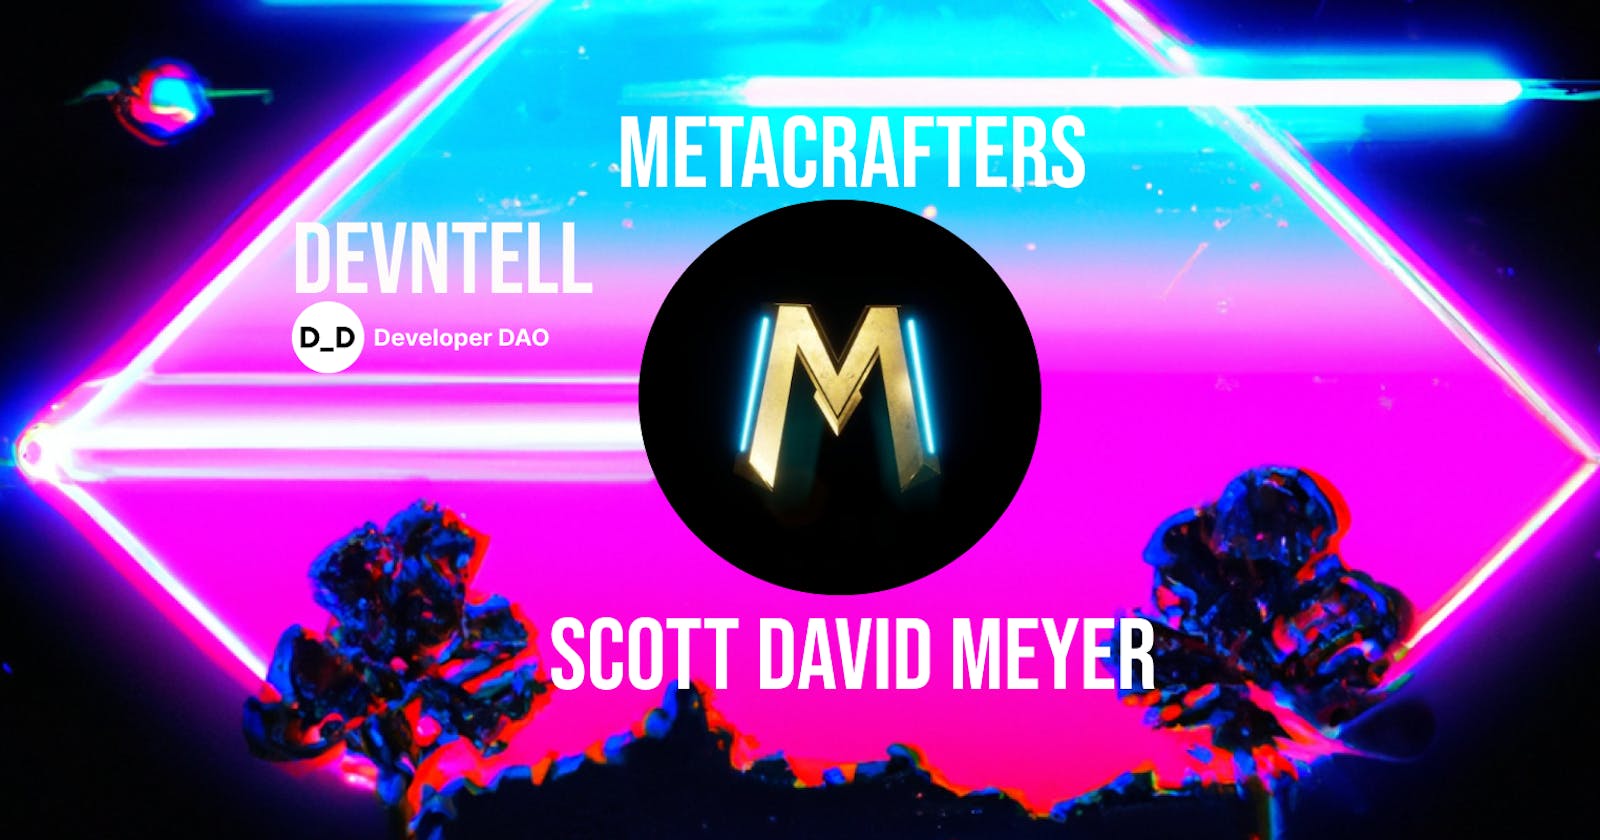 DevNTell - Metacrafters